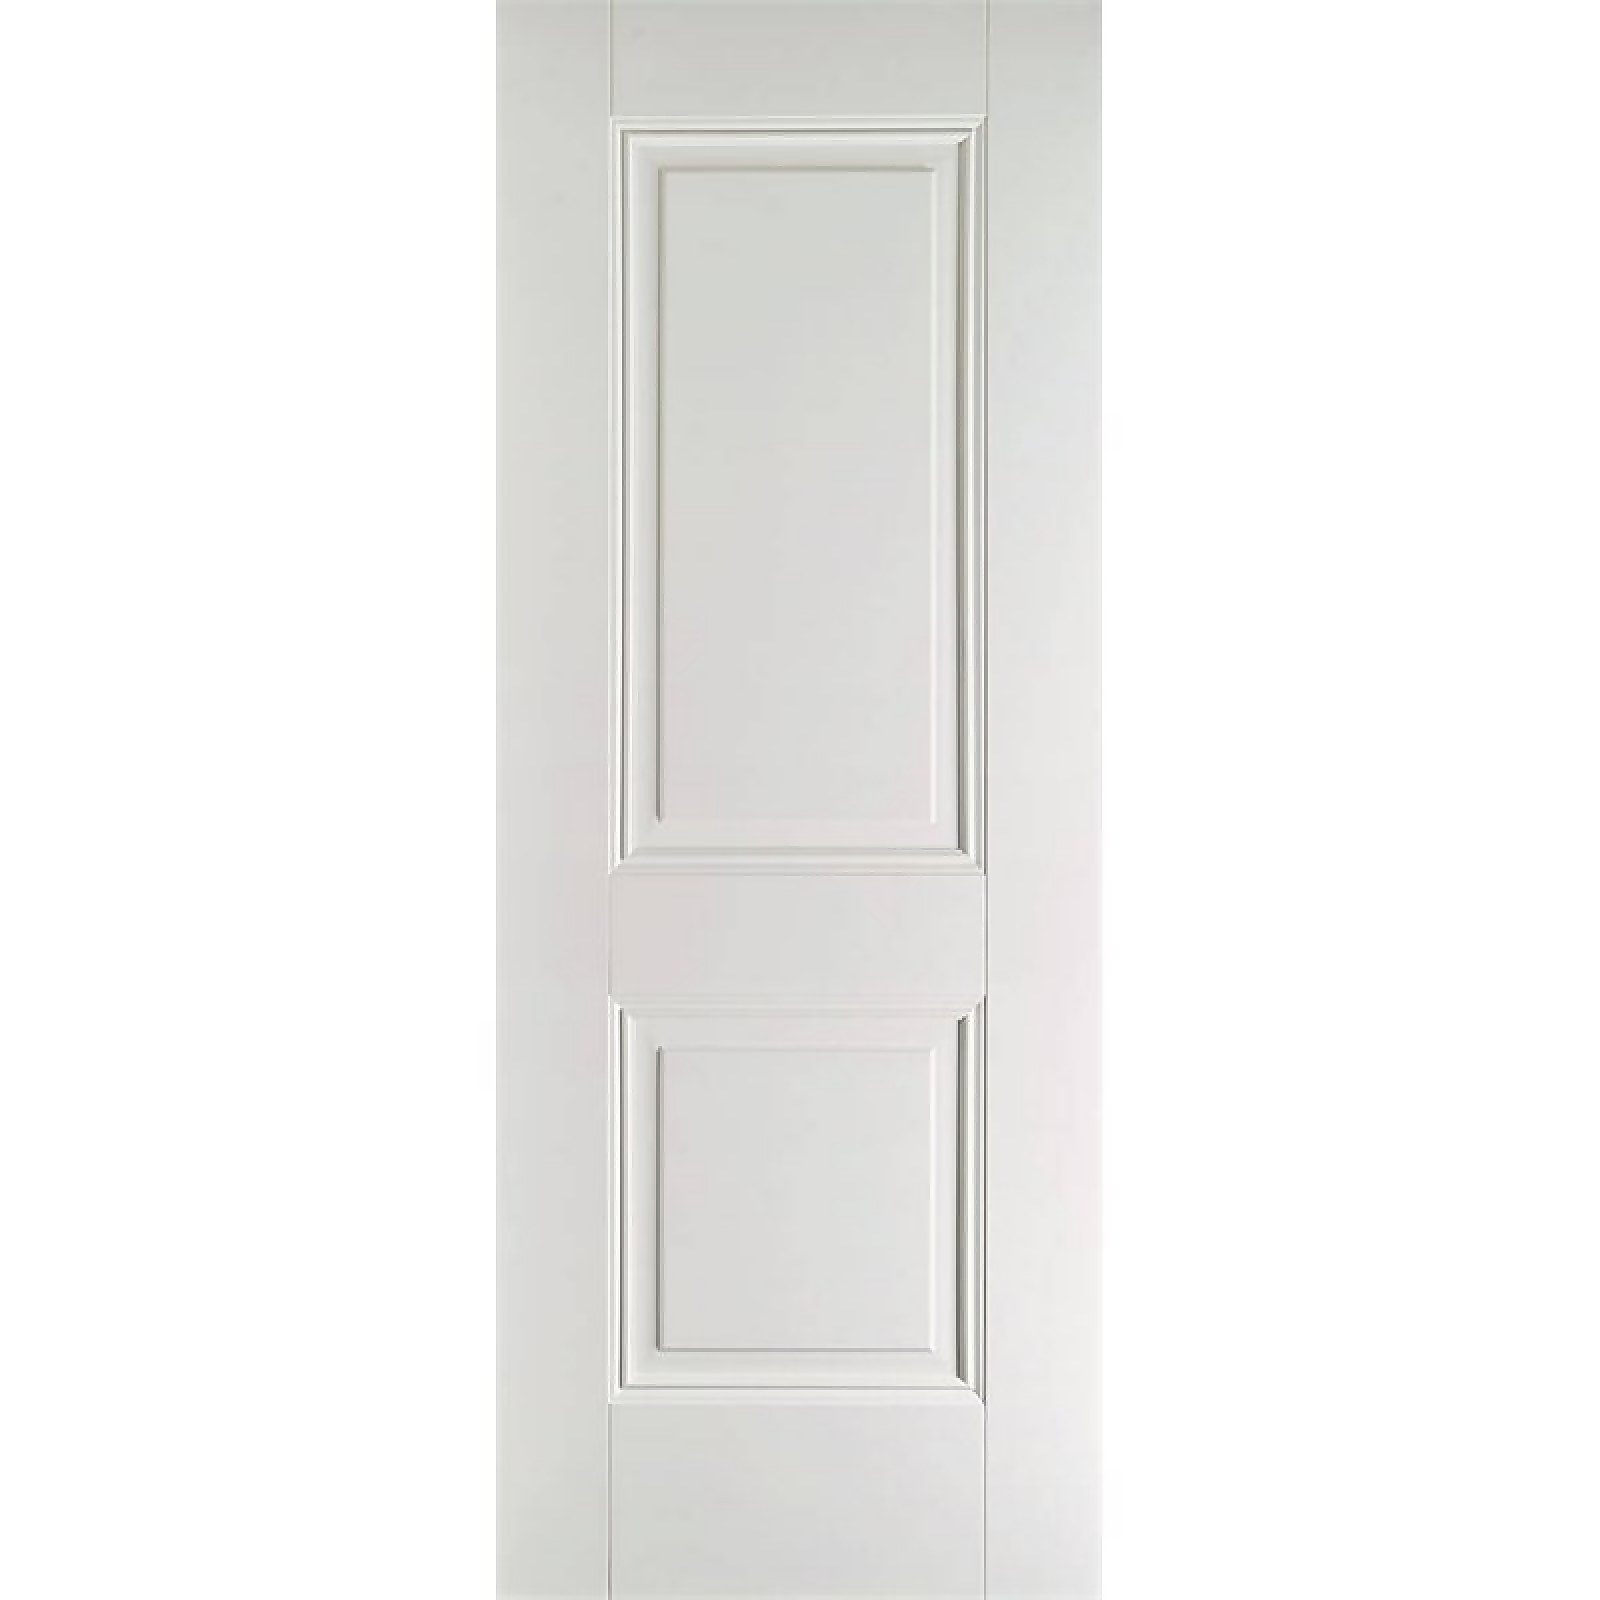 Arnhem Internal Primed White 2 Panel Fire Door - 686 x 1981mm